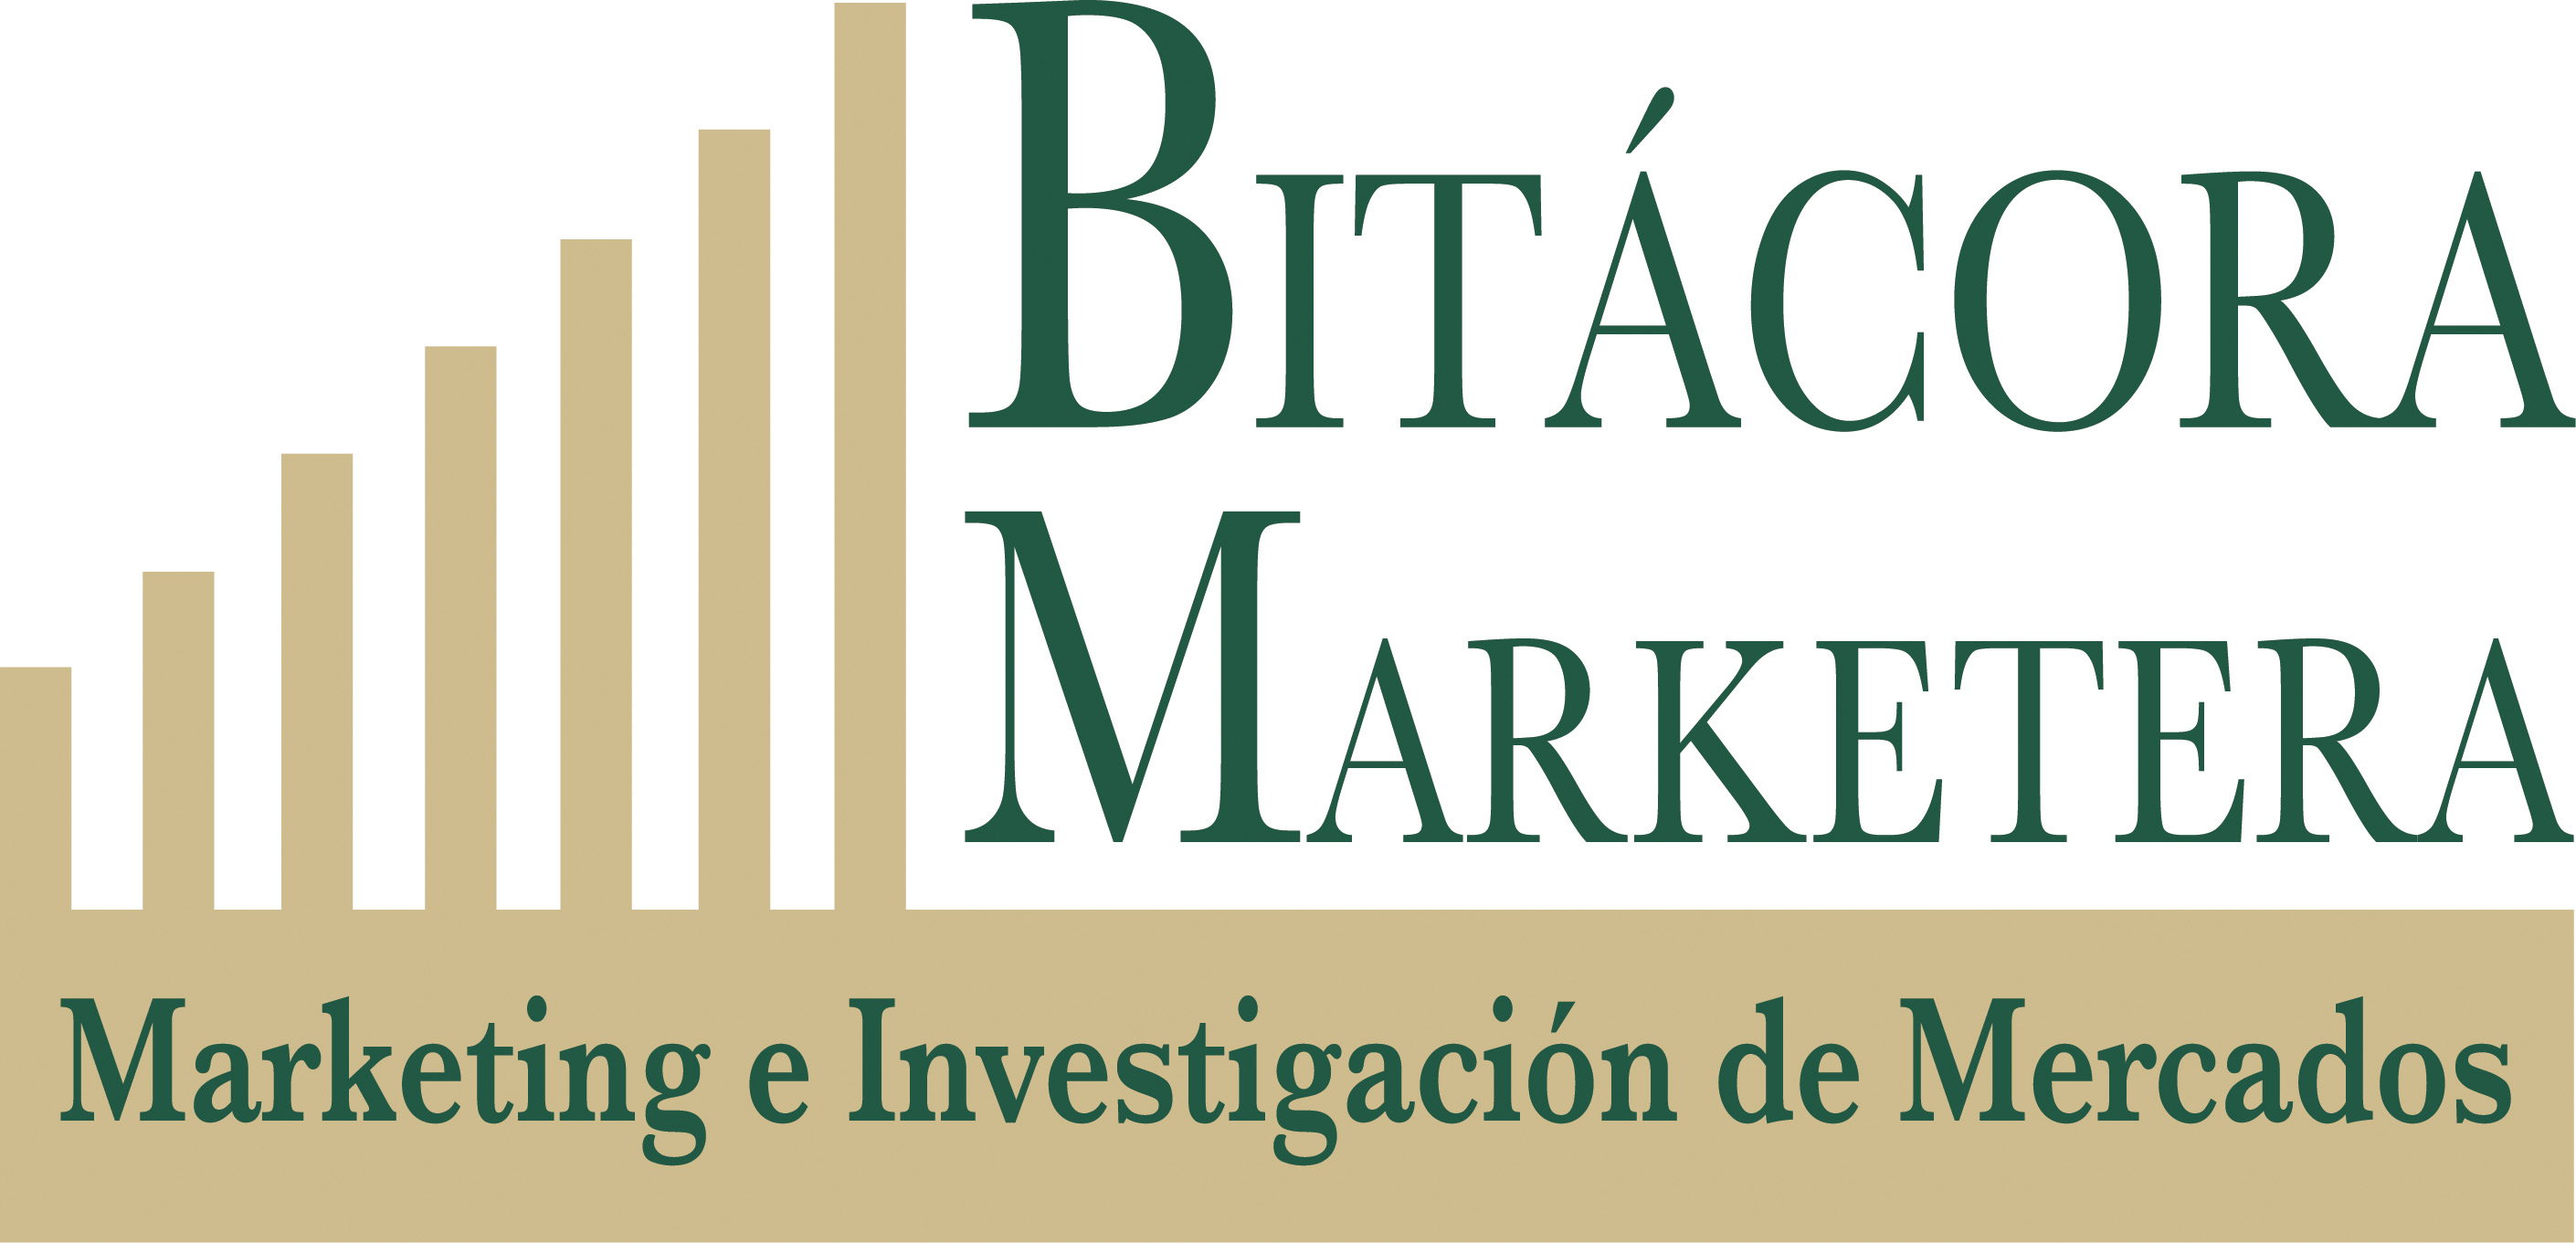 Bitacora Marketera